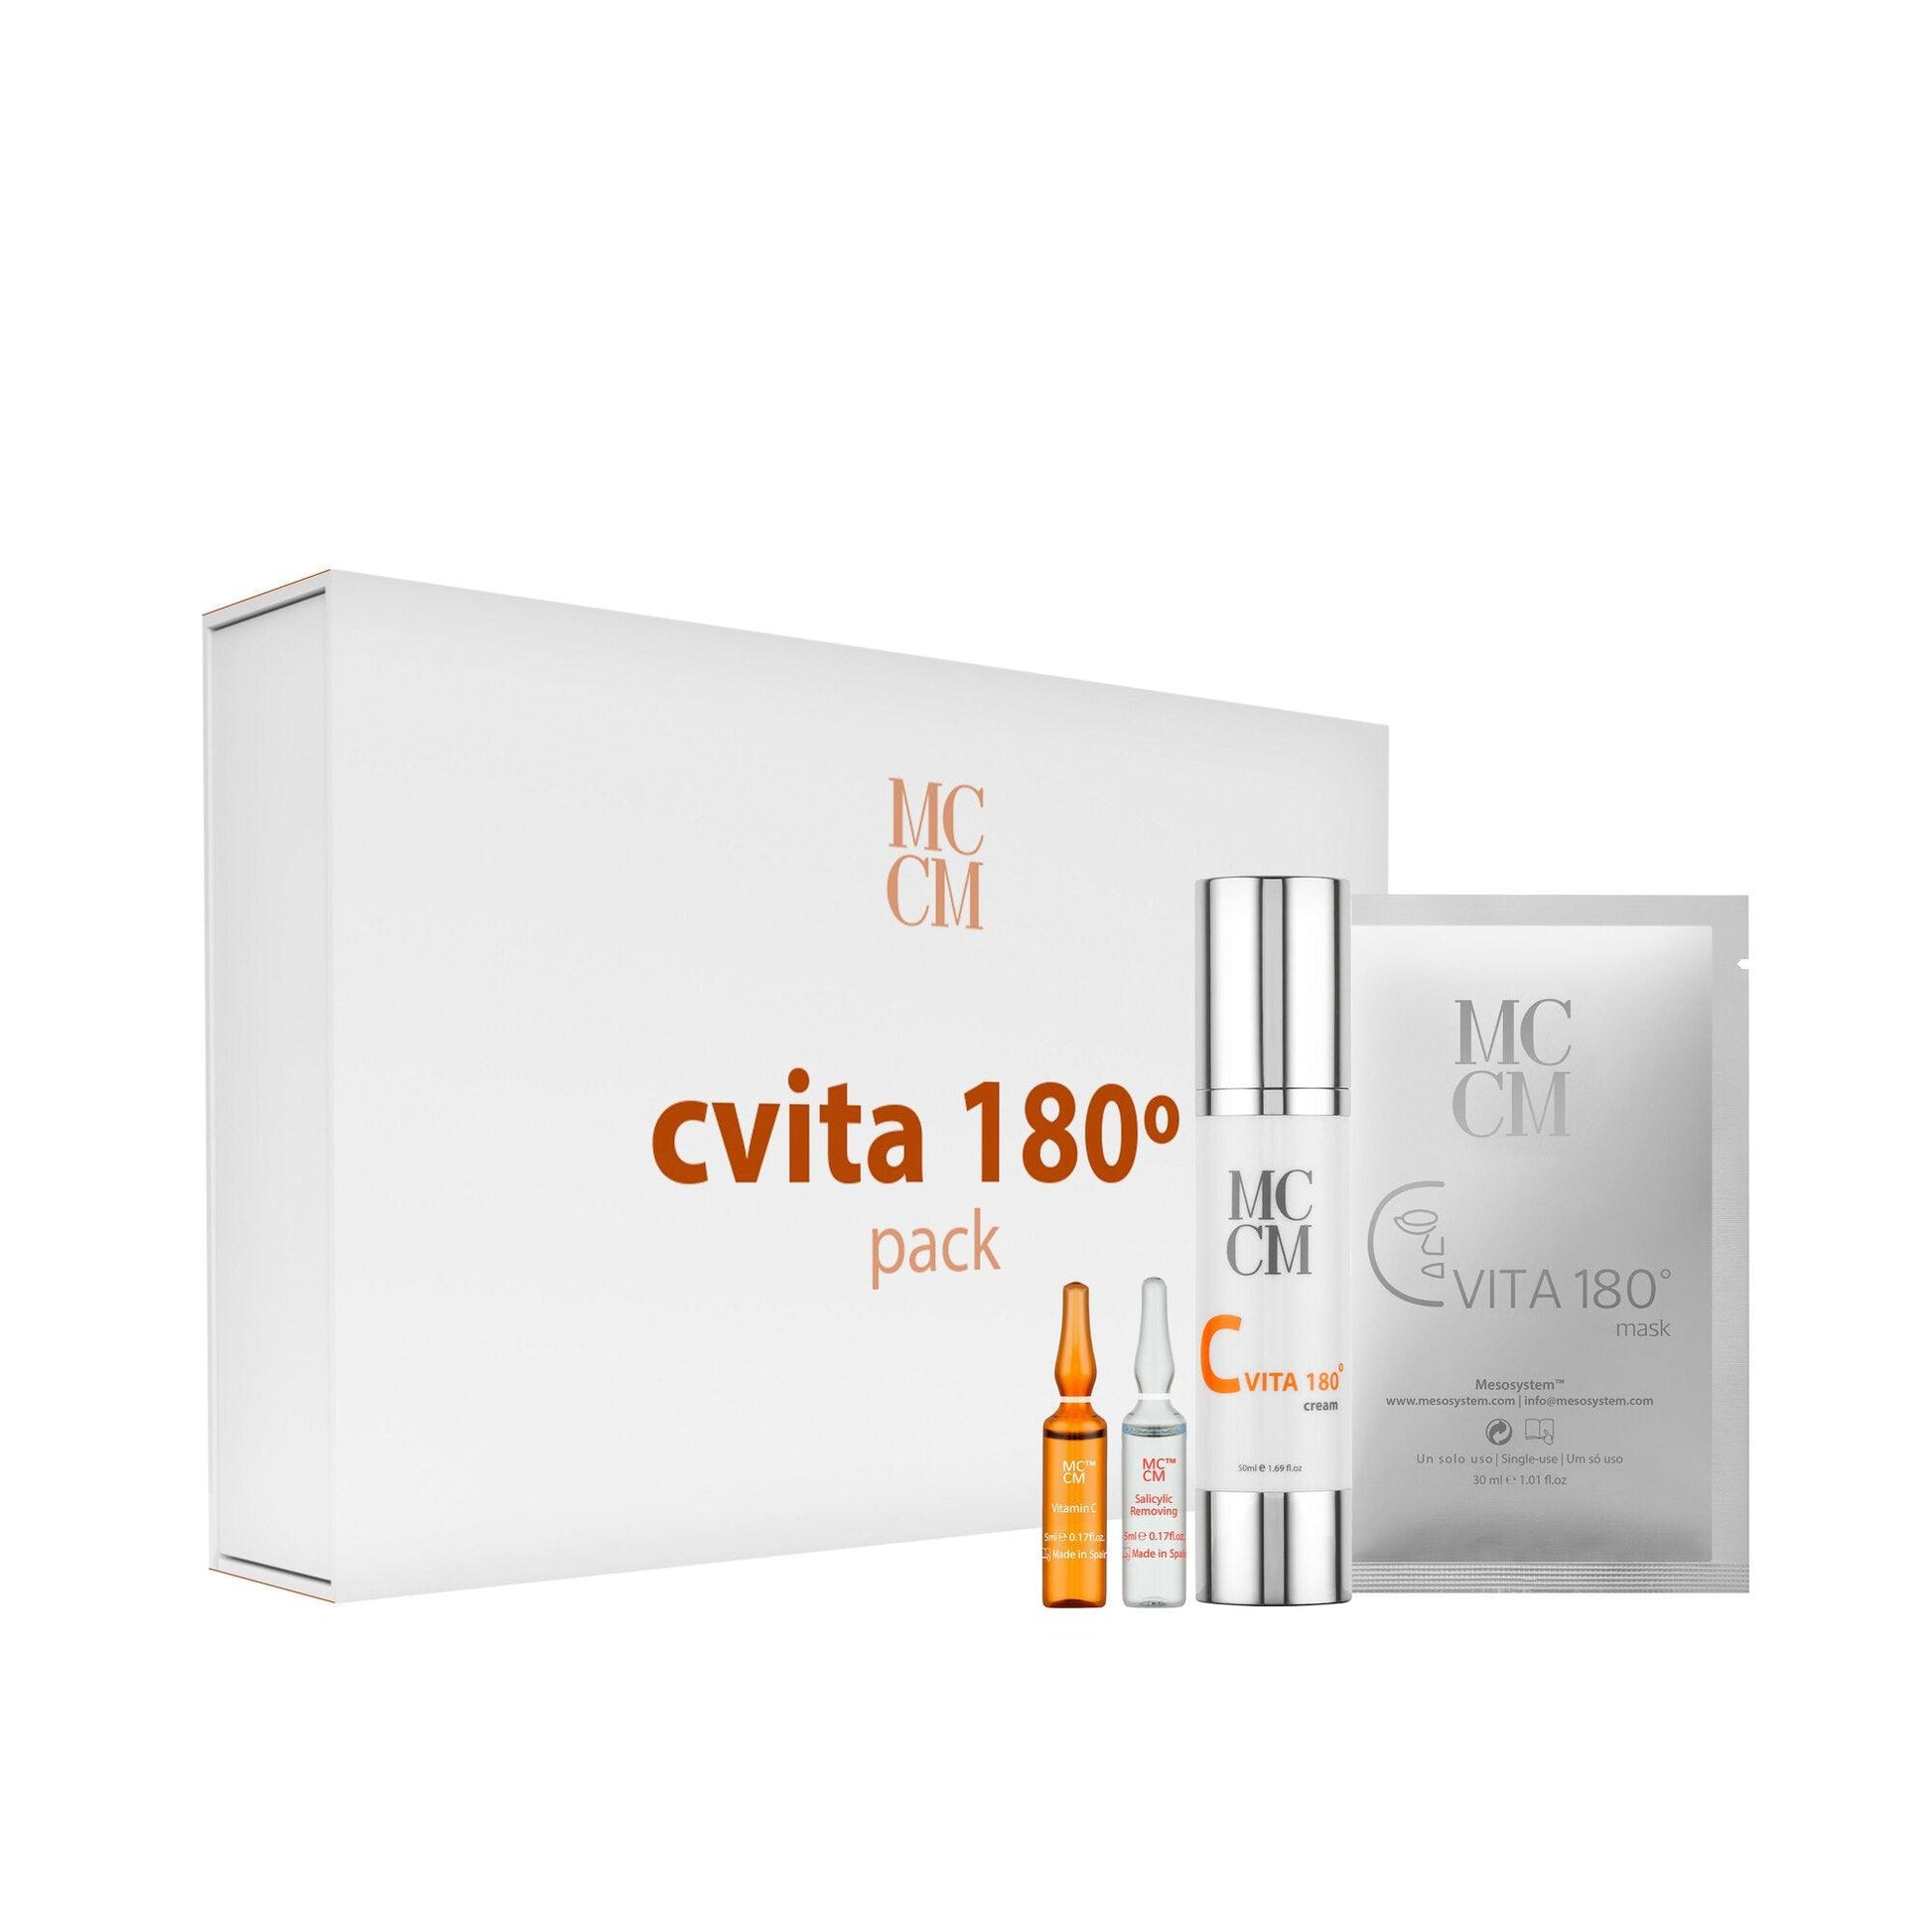 Pack CVITA 180º - MCCM Medical Cosmetics